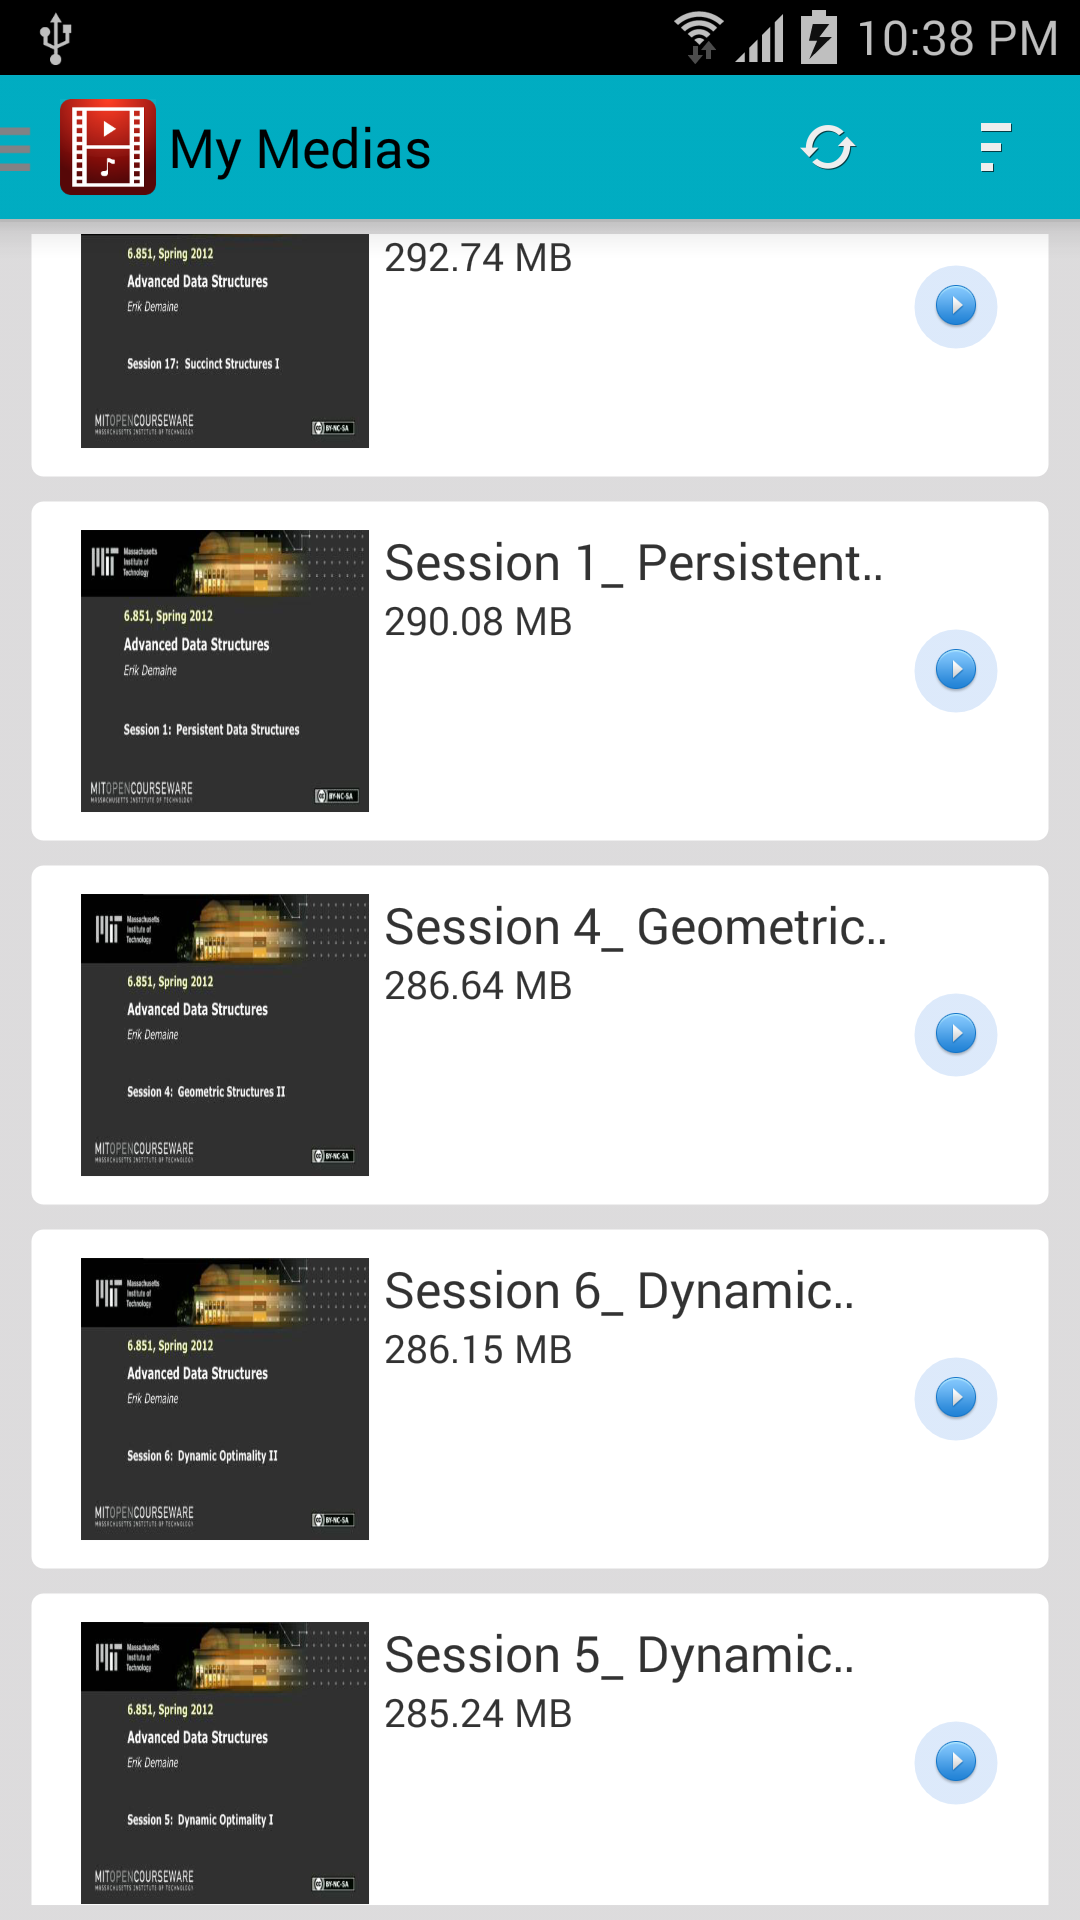 Android application Video Converter screenshort